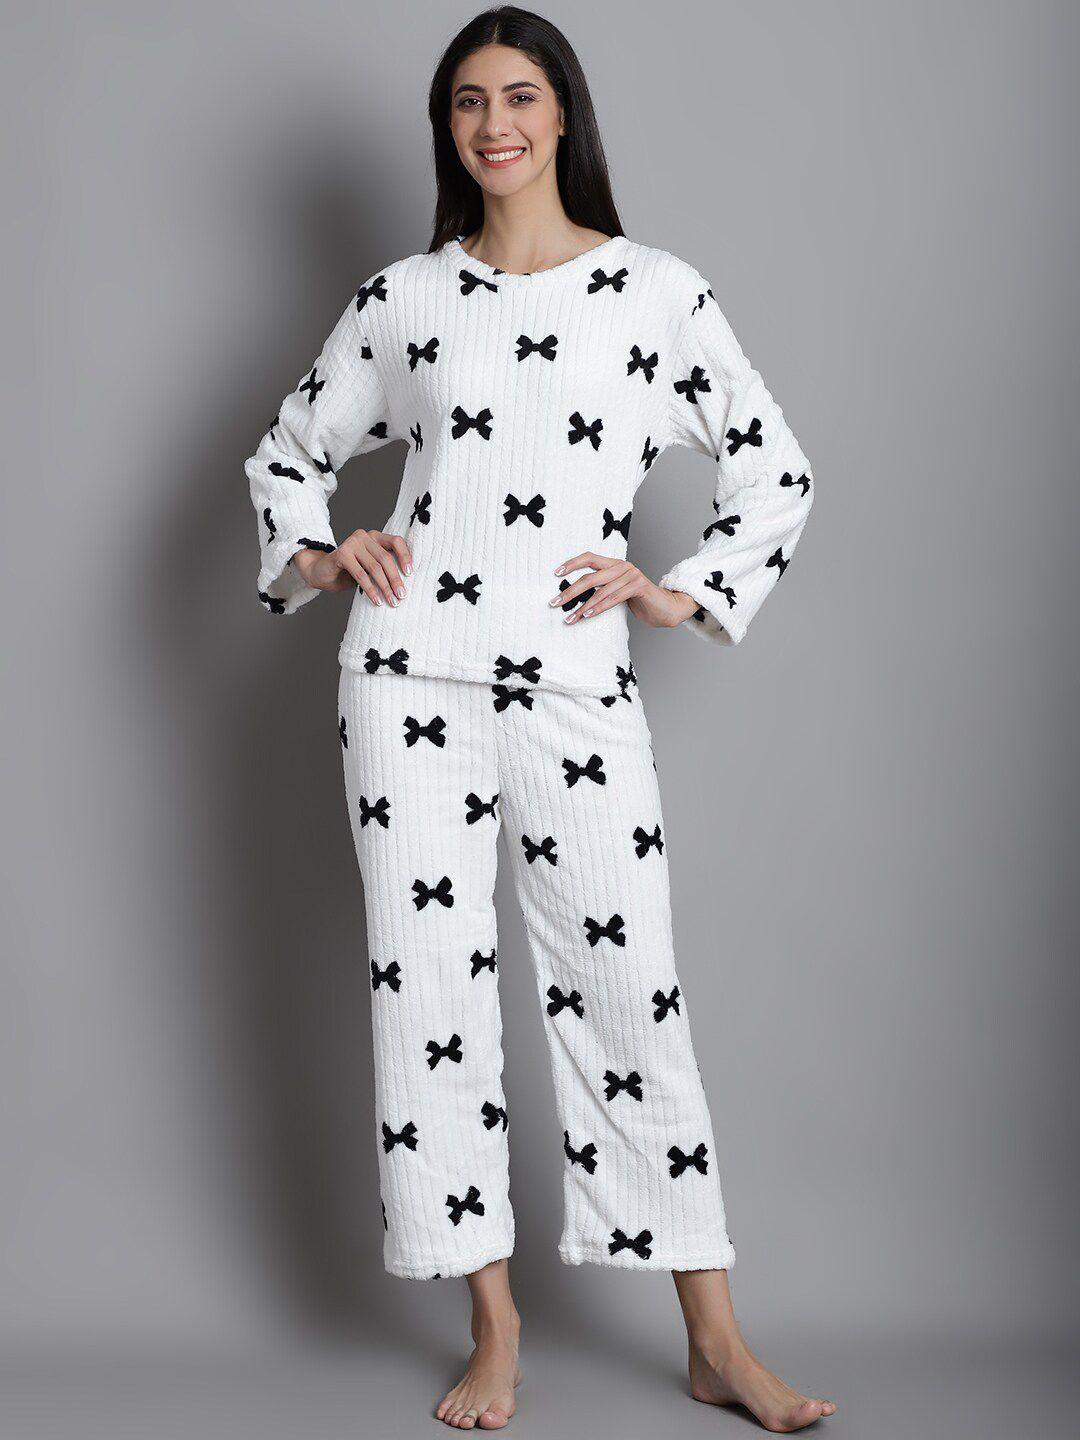 jinfo-printed-fleece-top-and-pyjamas-night-suit